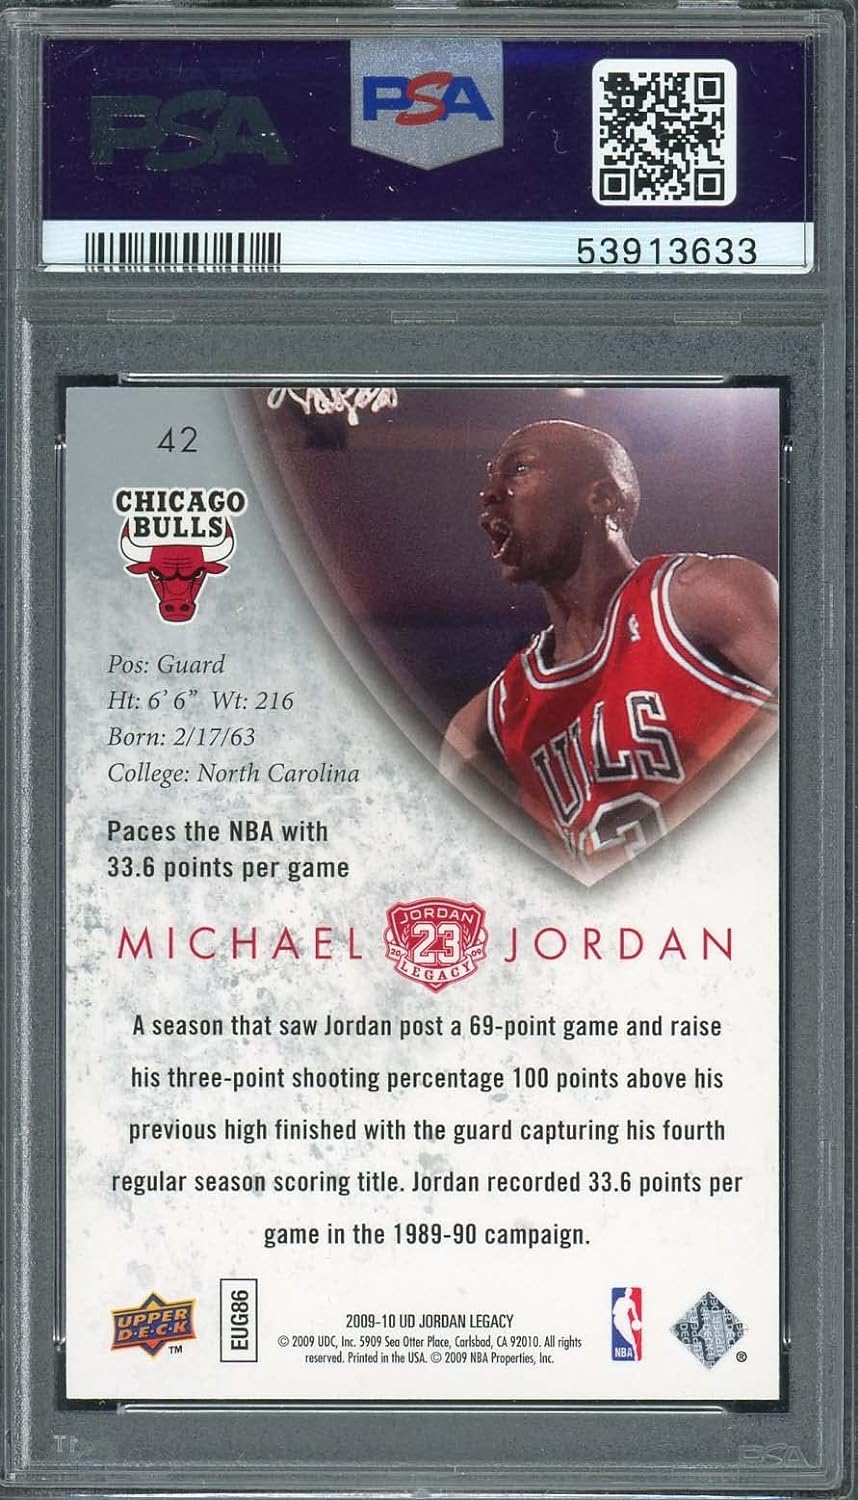 Michael Jordan 2009 Upper Deck Legacy Gold Basketball Card #42 Graded PSA 8-Powers Sports Memorabilia